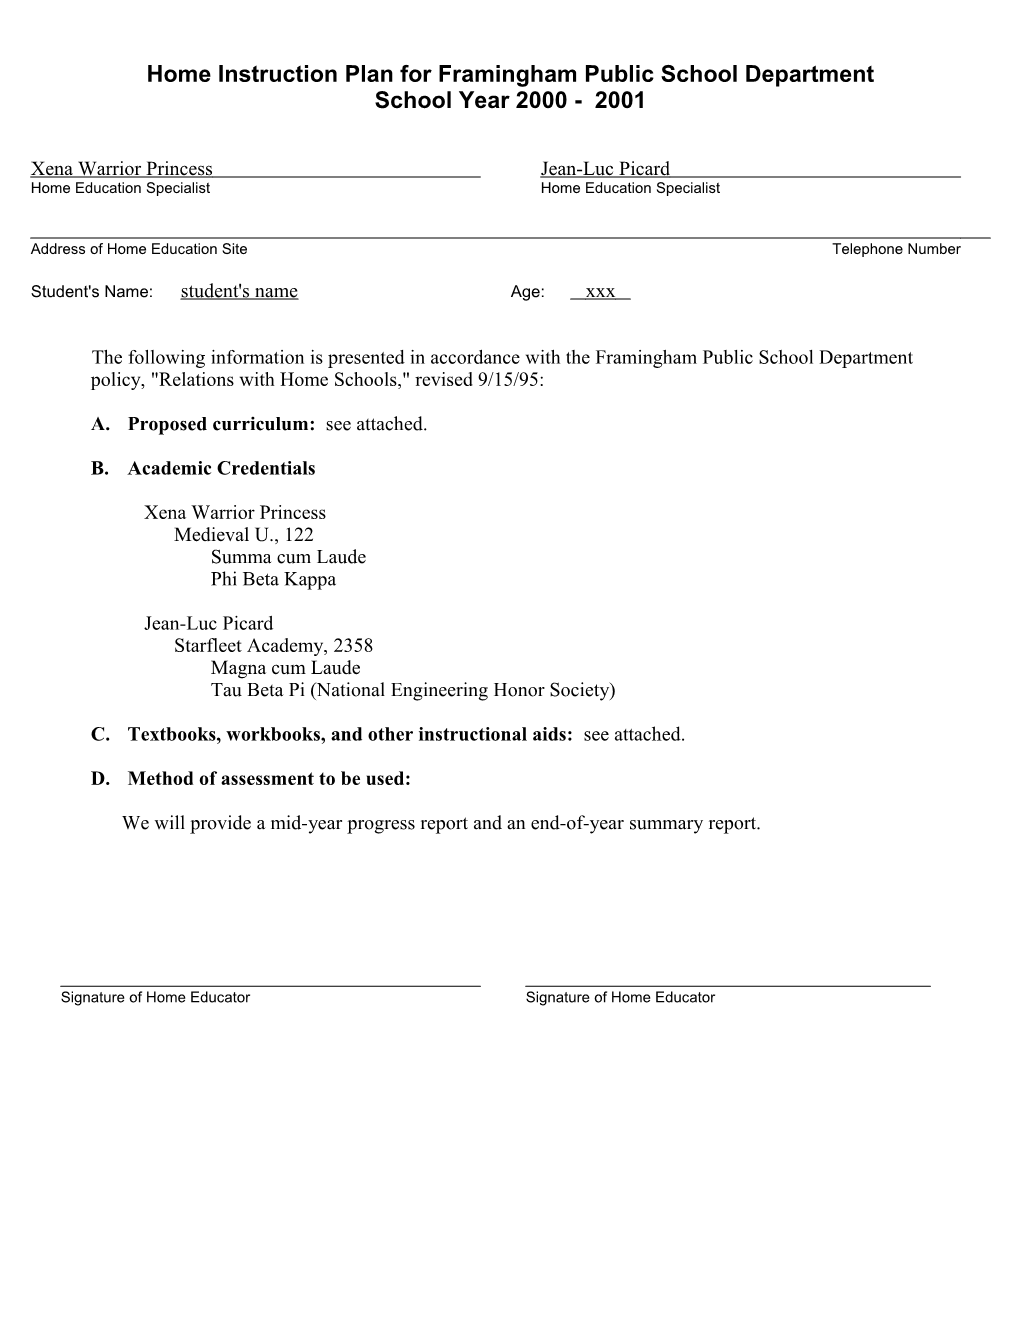 Affidavit of the Supervisor of a Pennsylvania Home Education Program